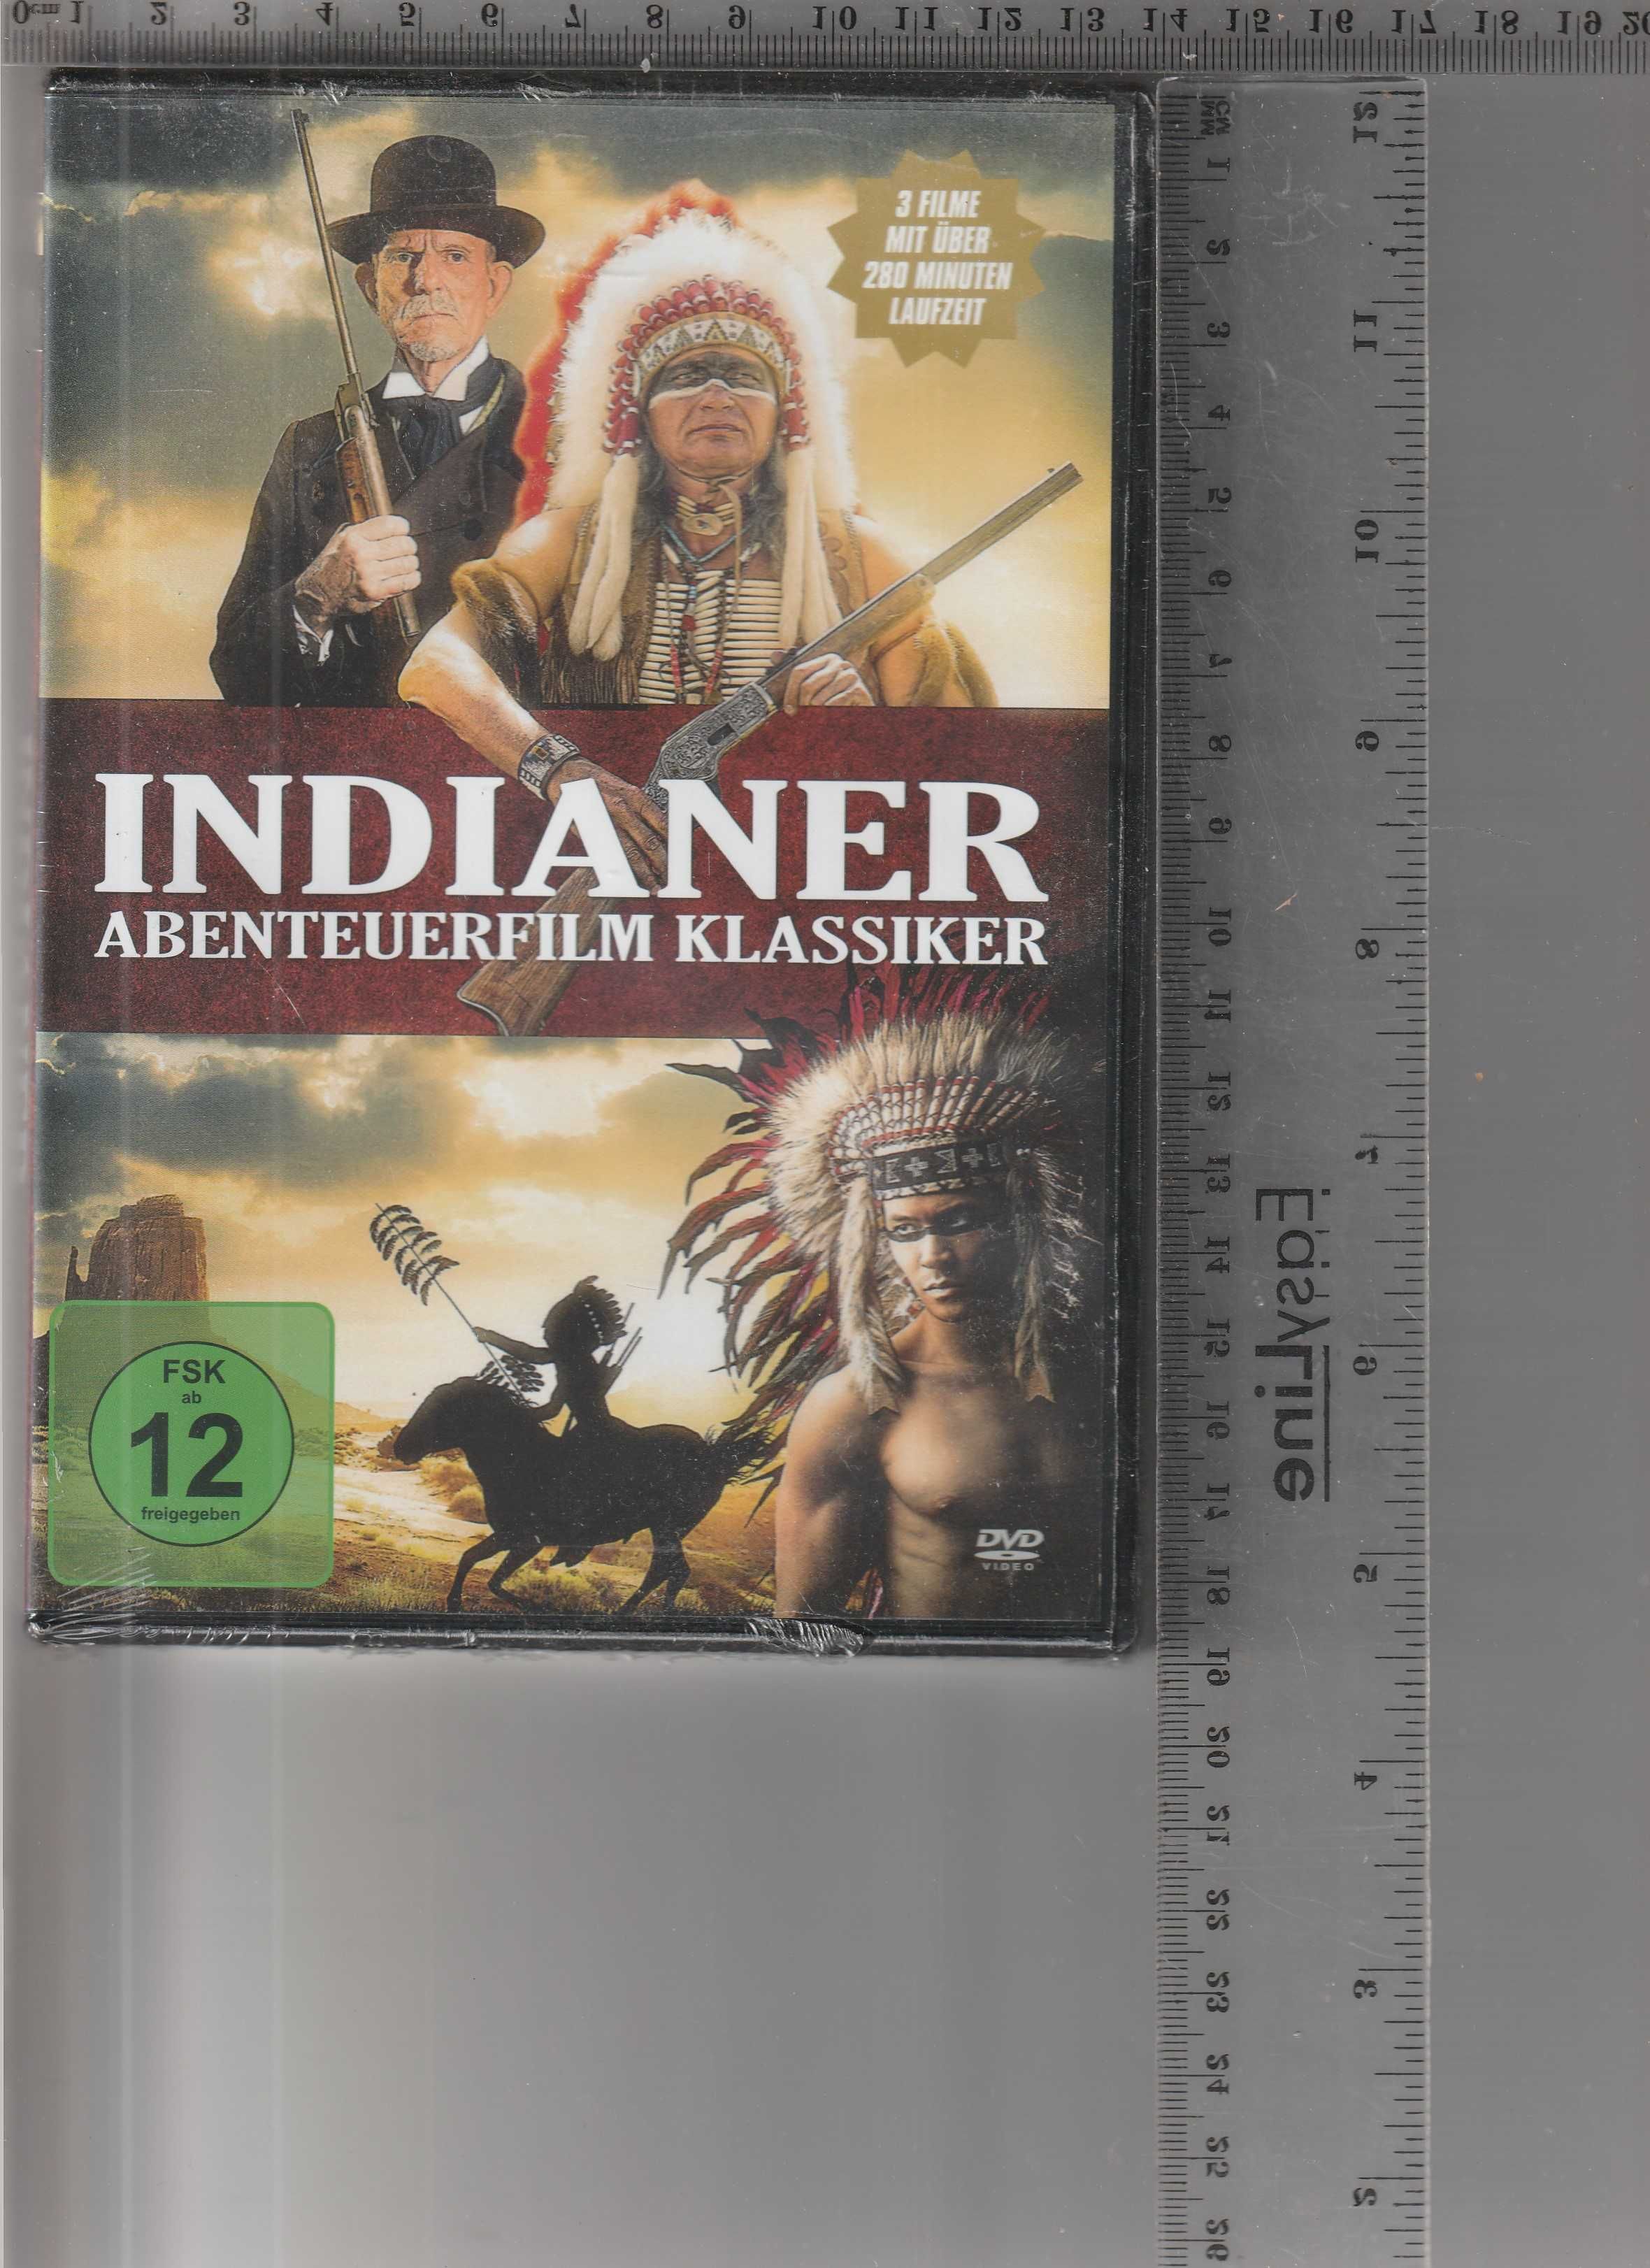 Indianer Abentuuerfilm klassiker DVD